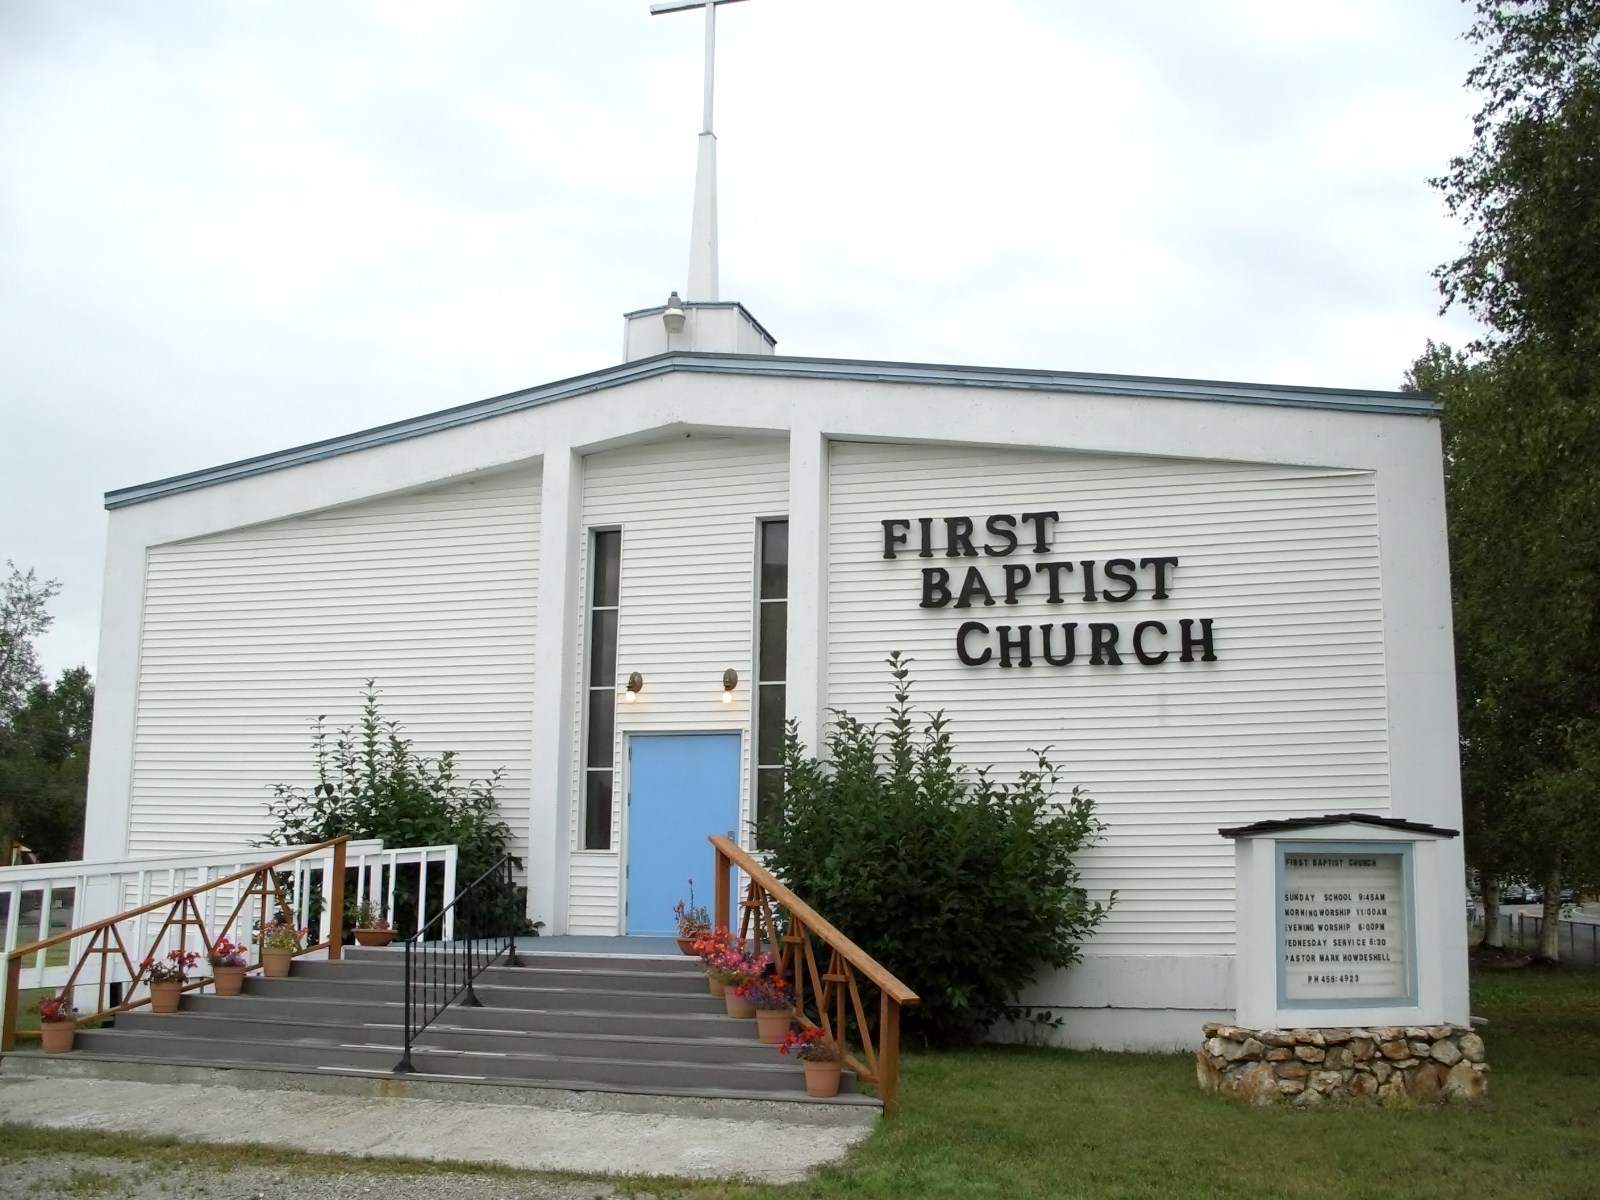 First Baptist Church - Belle Glade Information